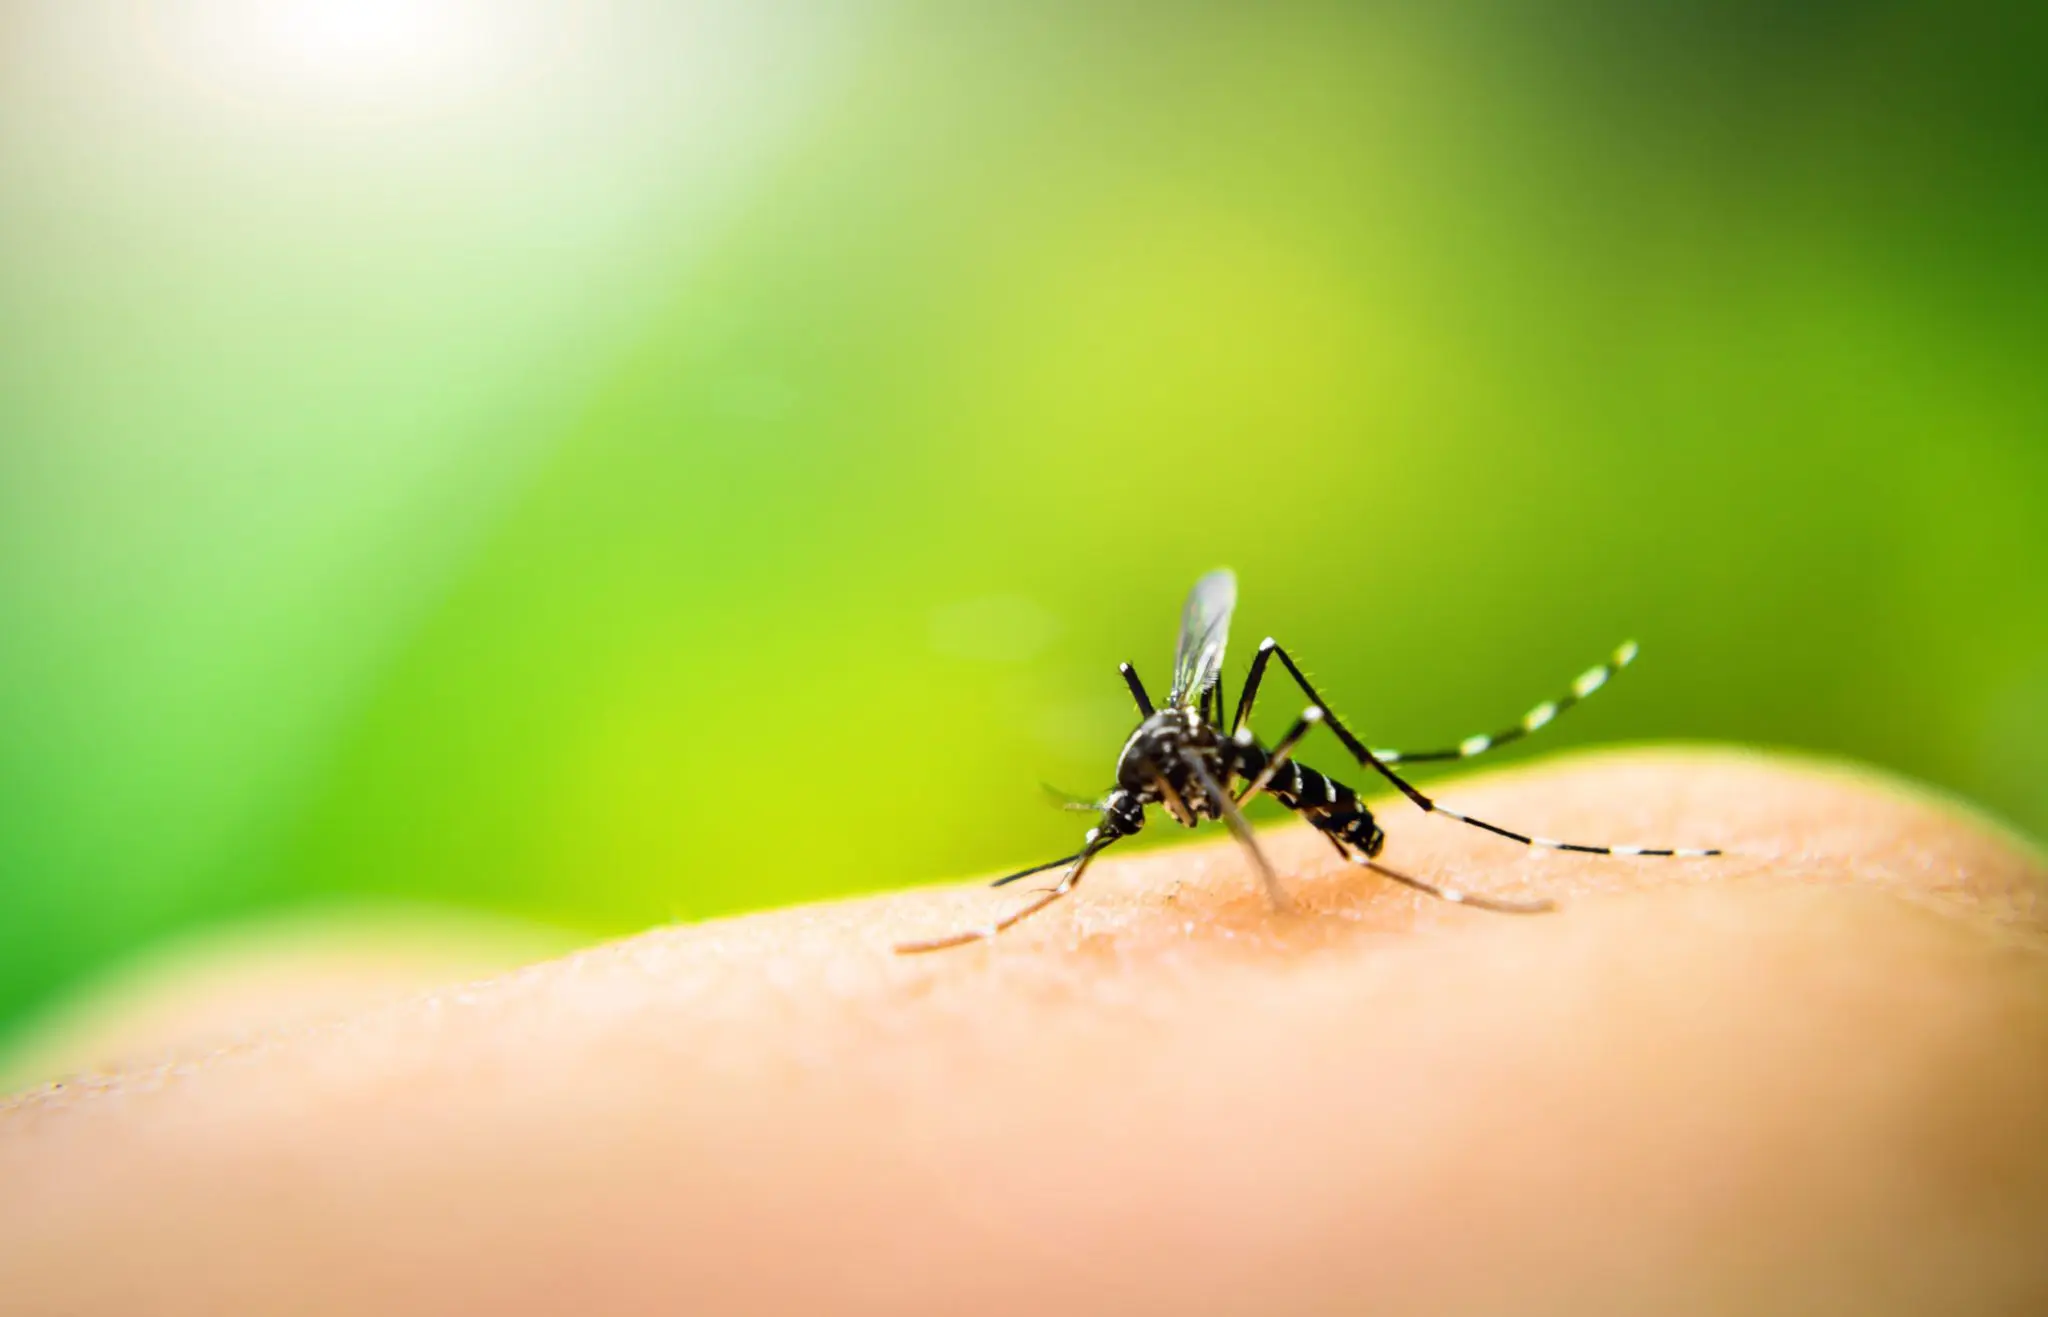 malaria-high-fever-causes-symptoms-risk-factors-sehatnagar-com